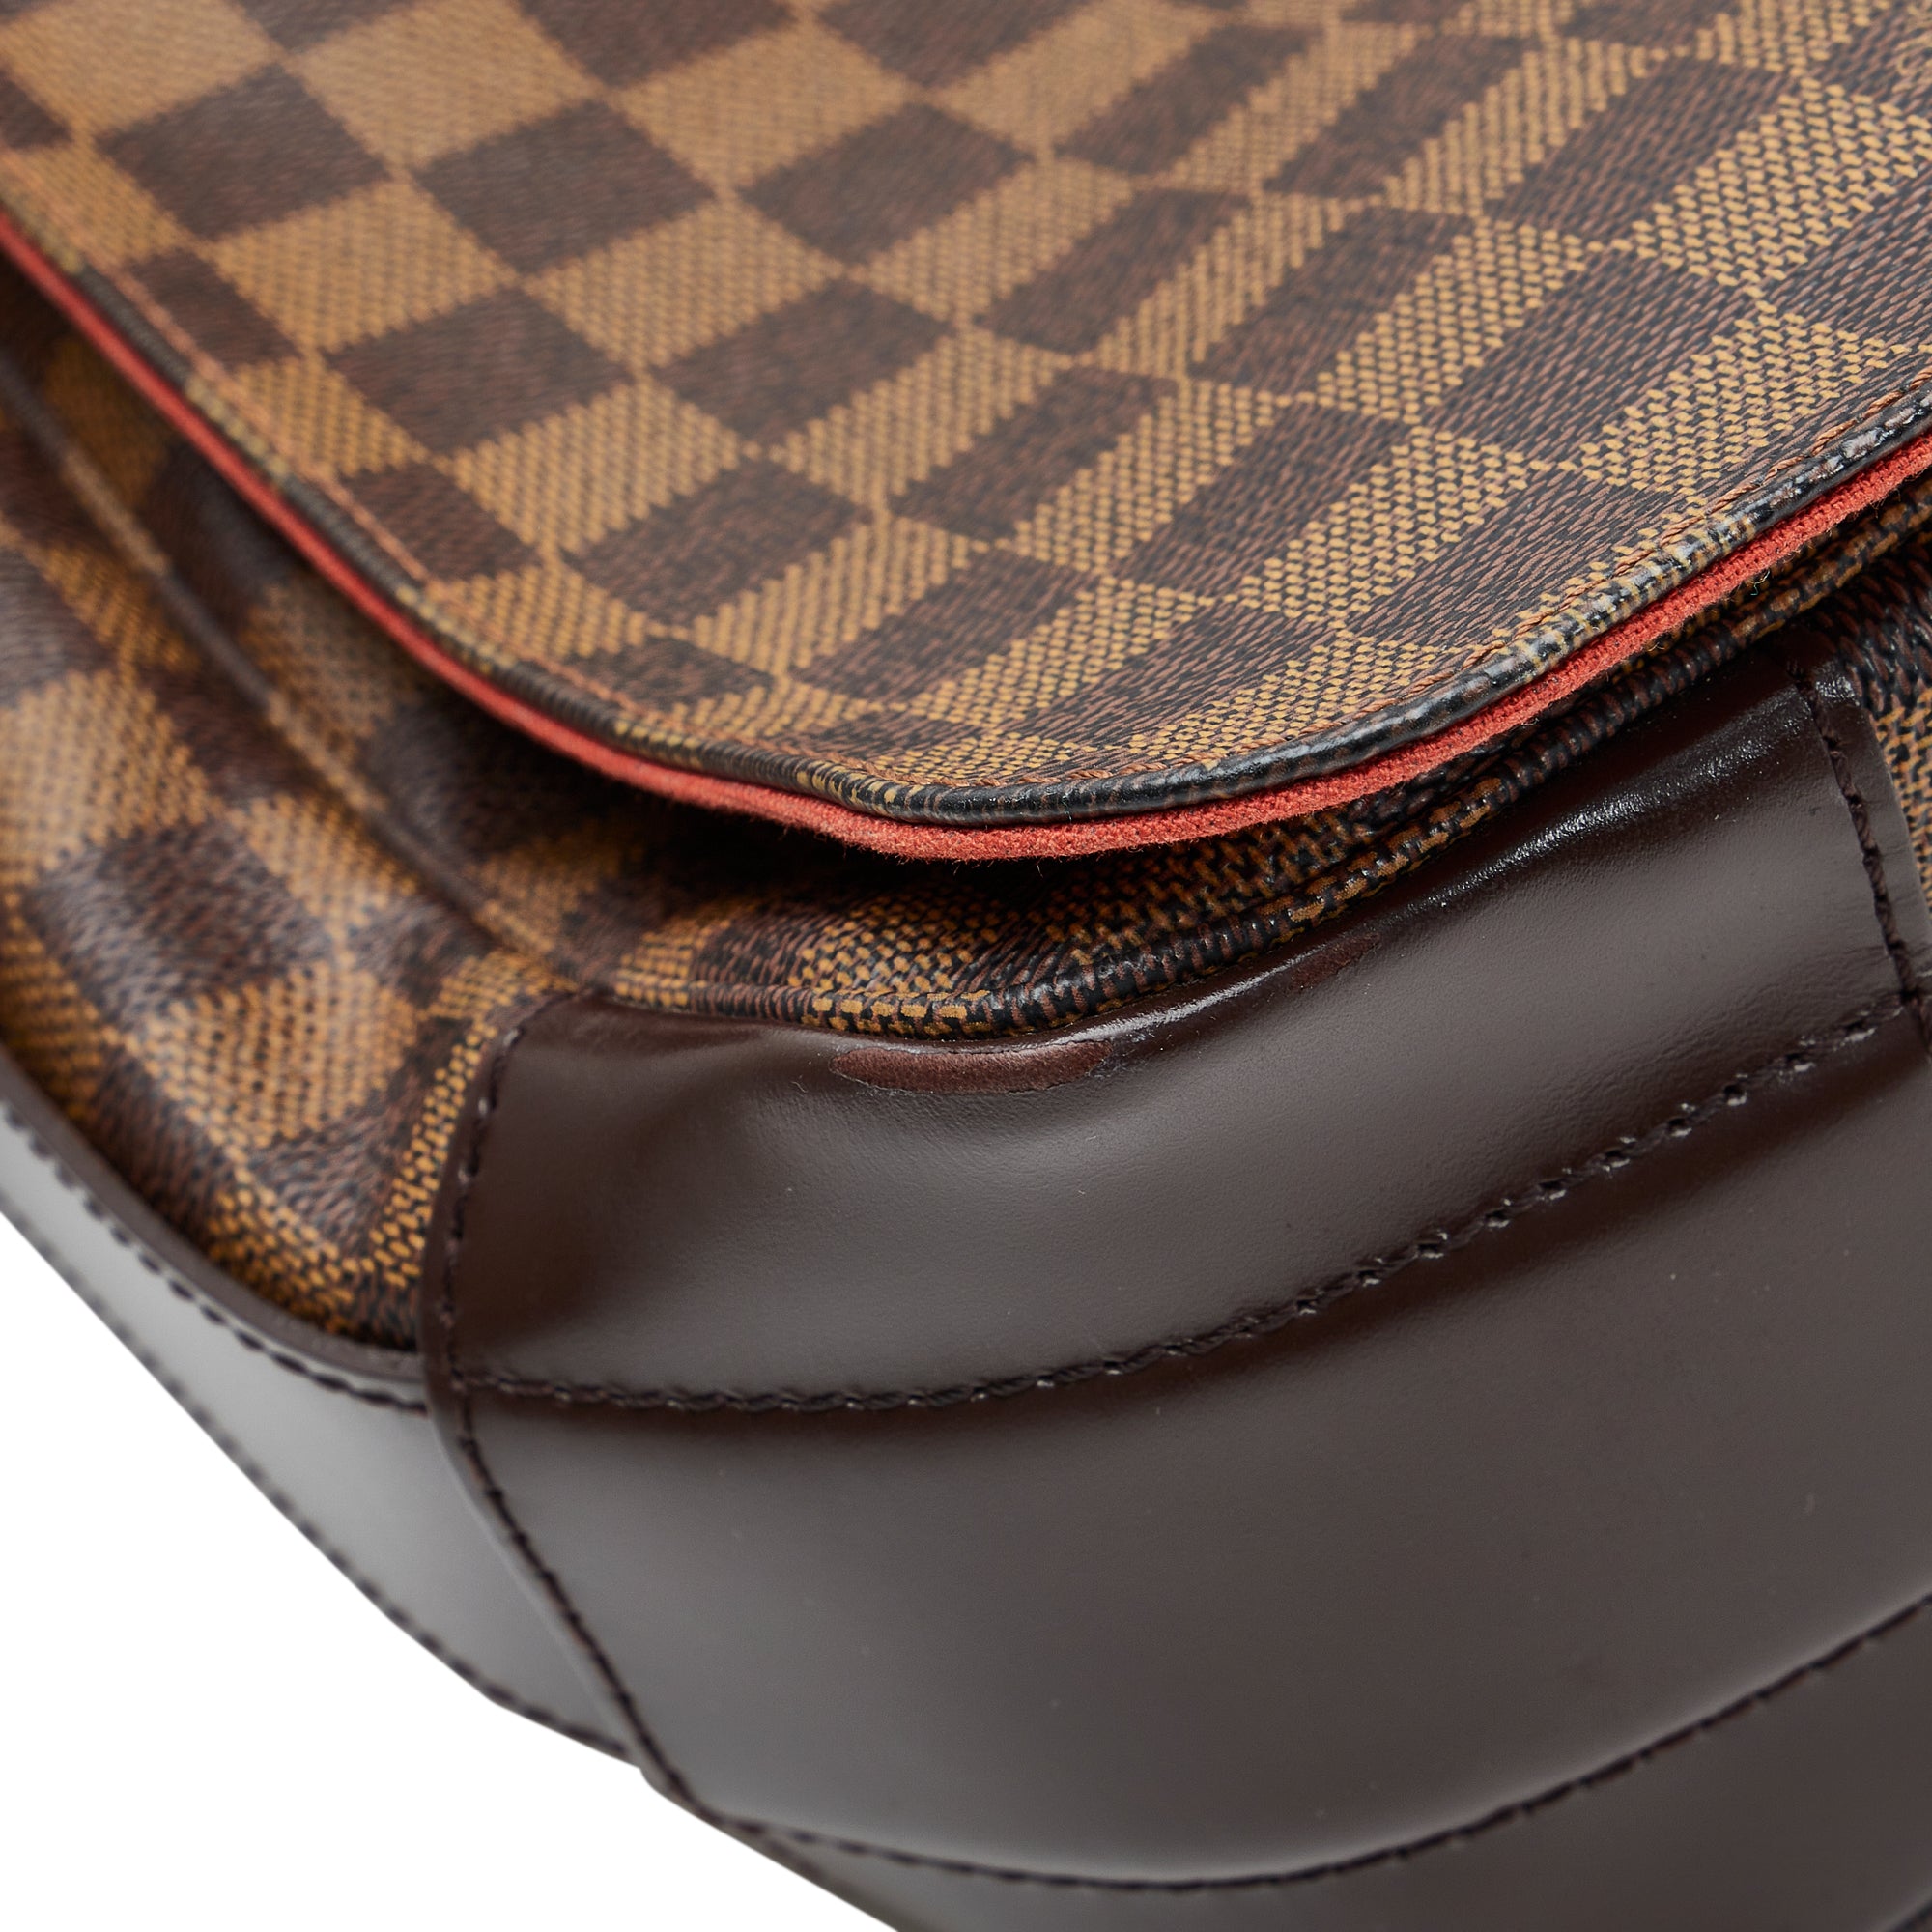 Authenticated Louis Vuitton Damier Ebene Bastille Brown Canvas Crossbody Bag